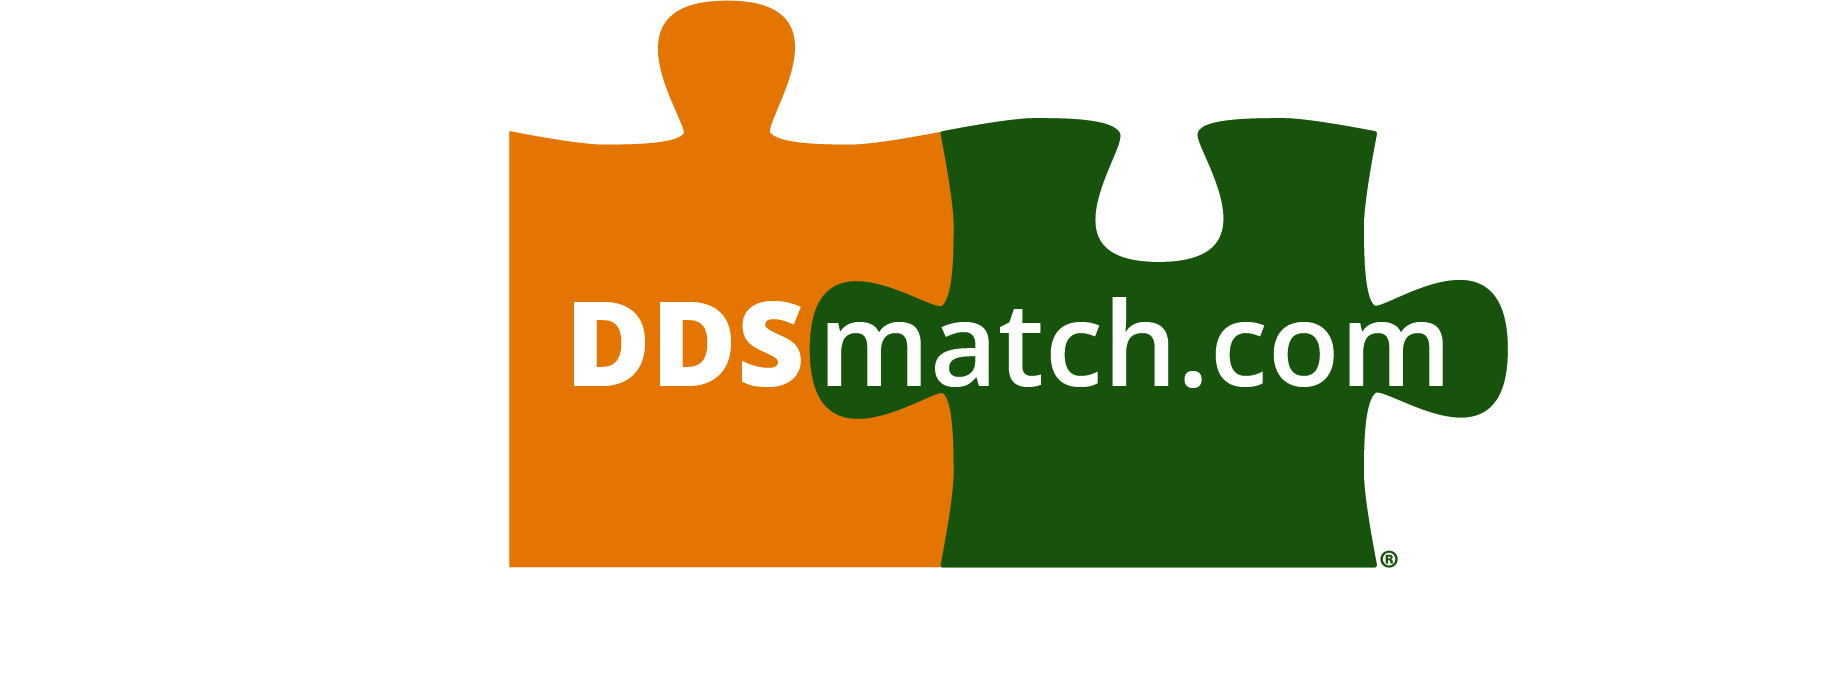 ddsmatch.com - Tony Counts Logo